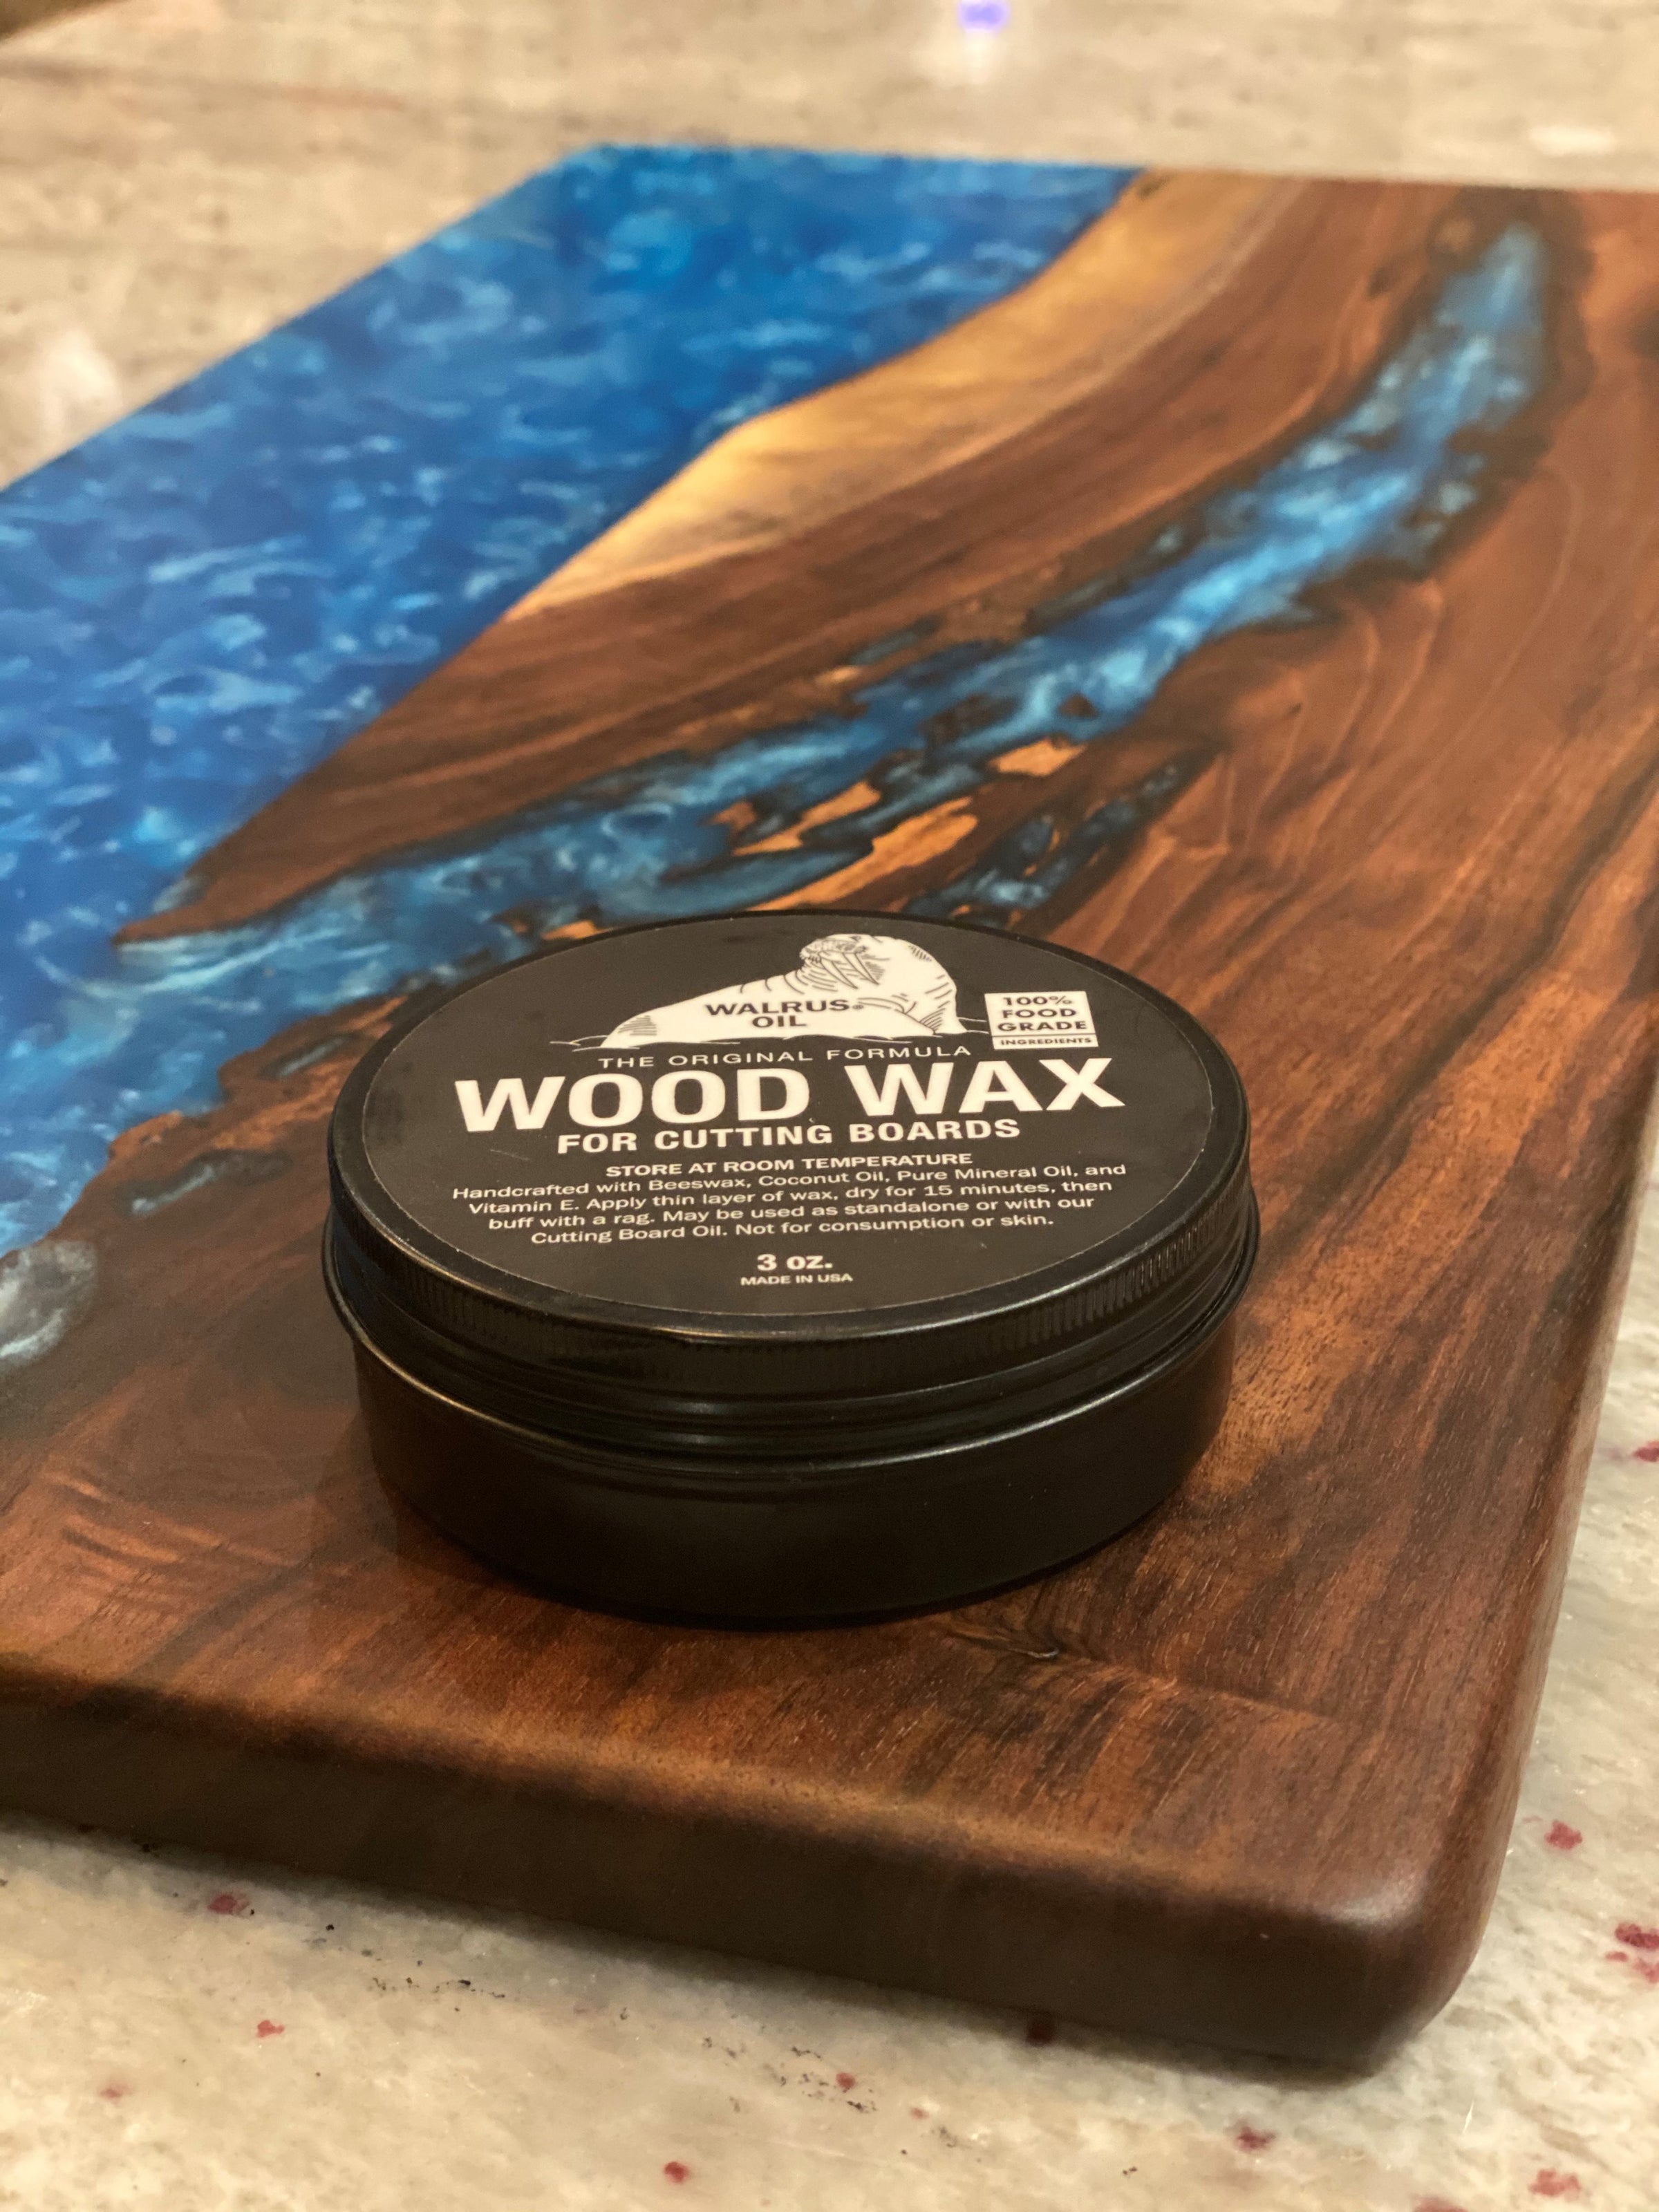 Walrus Oil Cutting Board Wood Wax 3oz